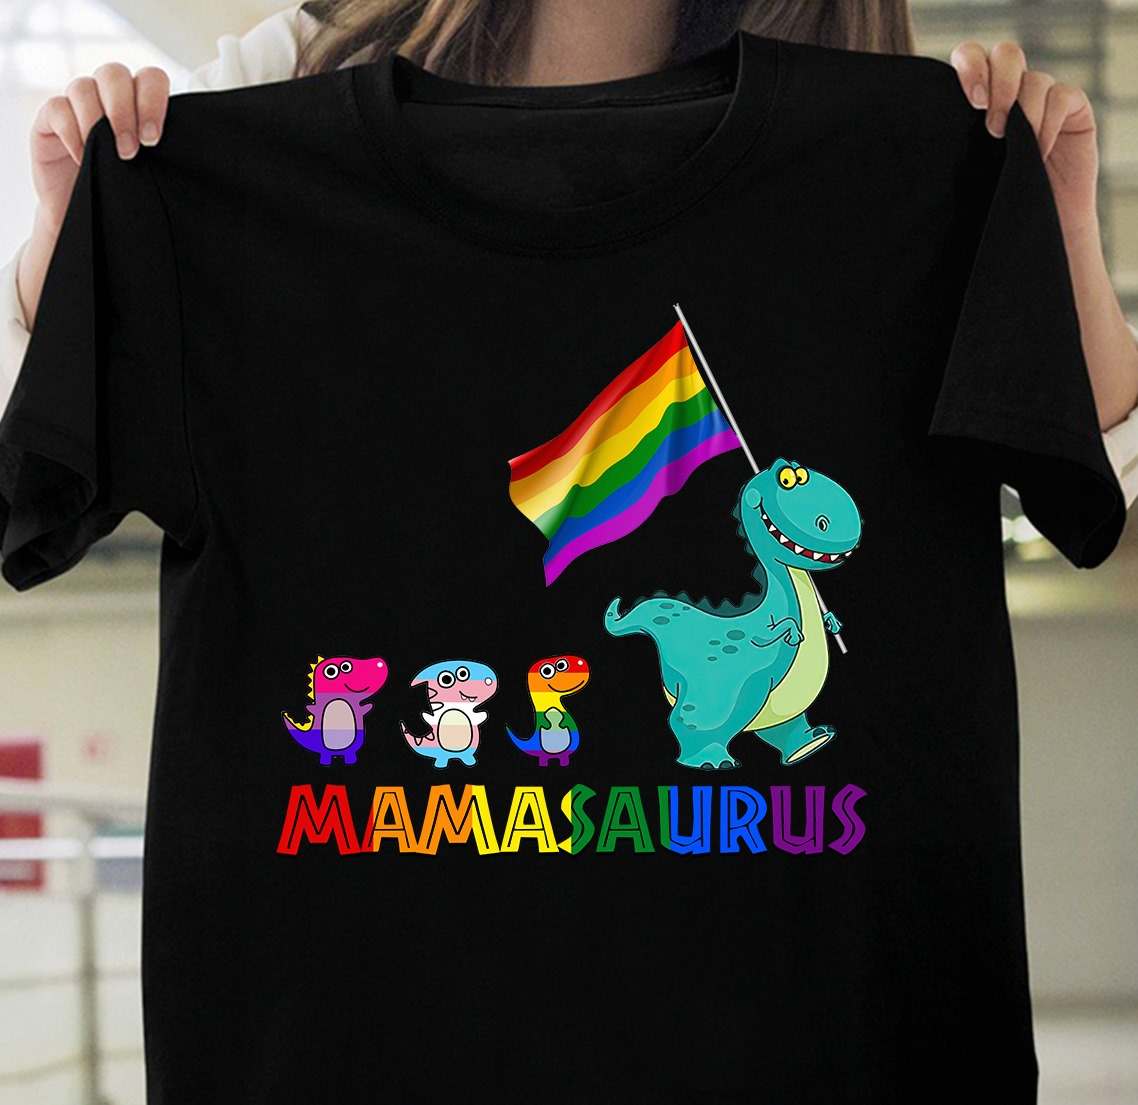 Mamasaurus - Mother and kids, dinosaur lover, lgbt community